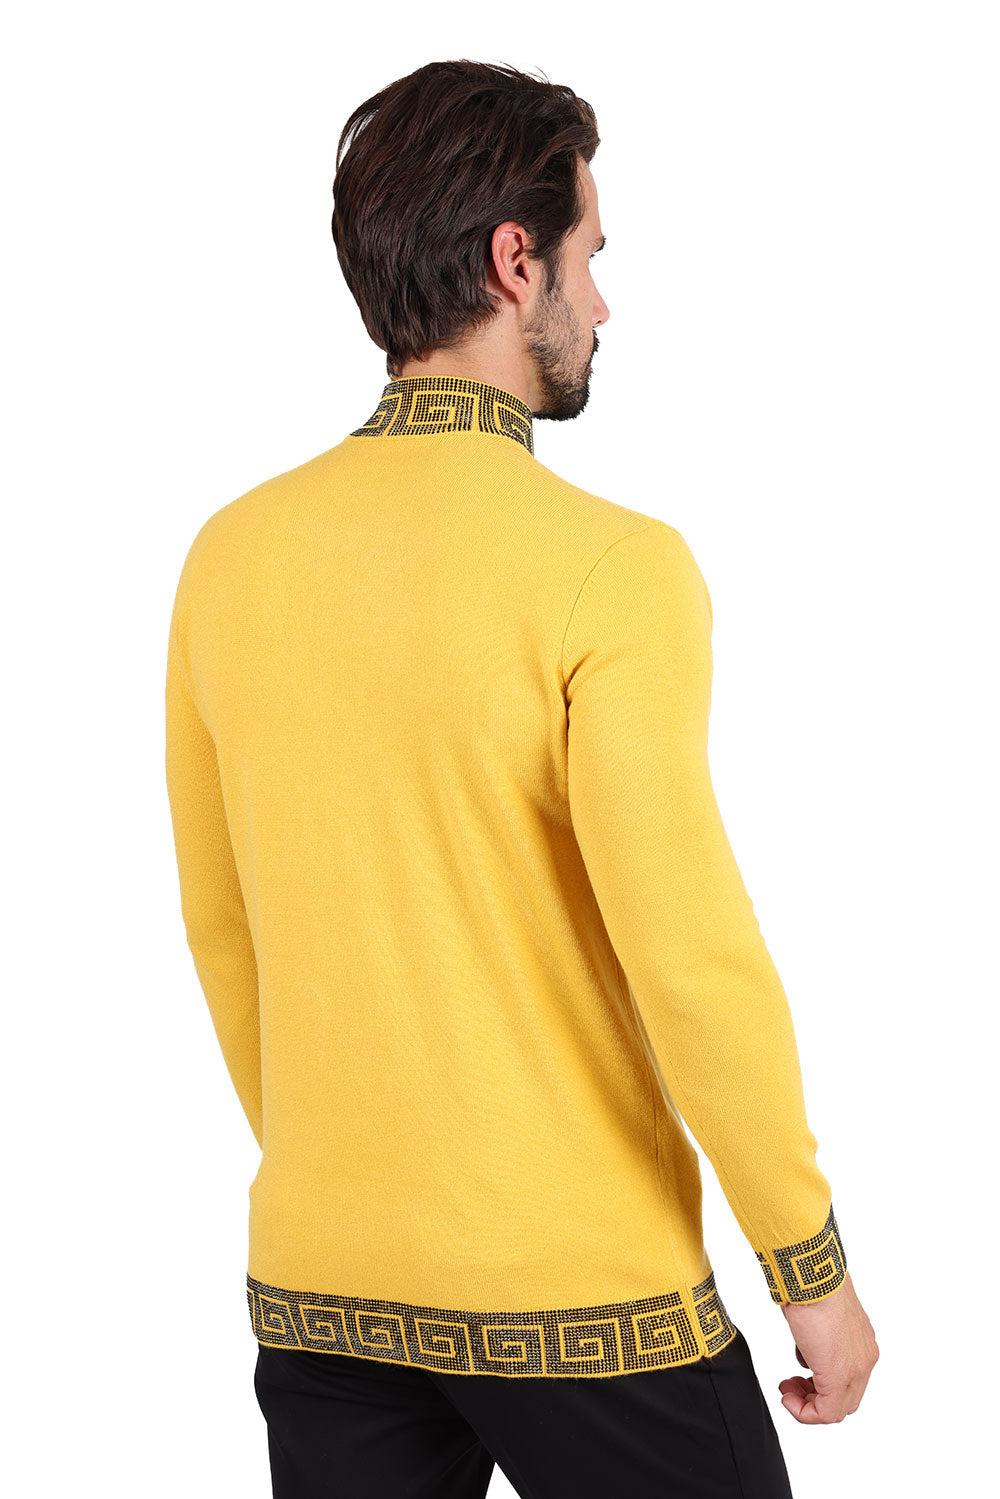 Barabas Men's Rhinestones Greek Key Pattern Turtleneck Sweater 2LS2106 Mustard Black